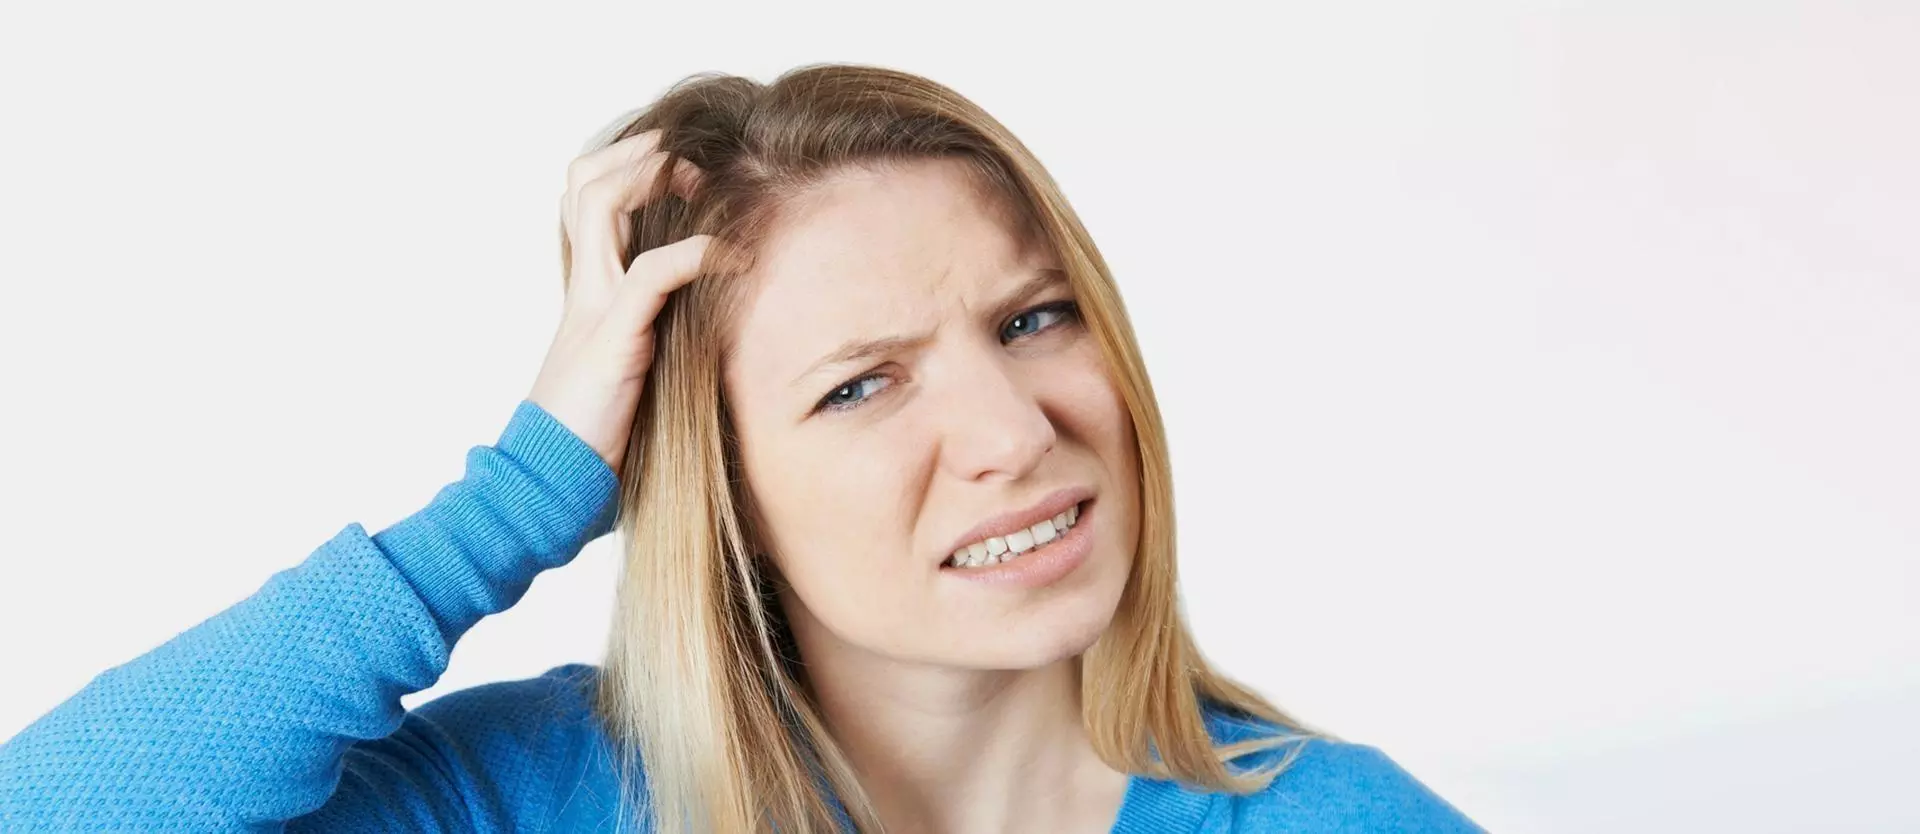 Can Dandruff Lead to Hair Loss?